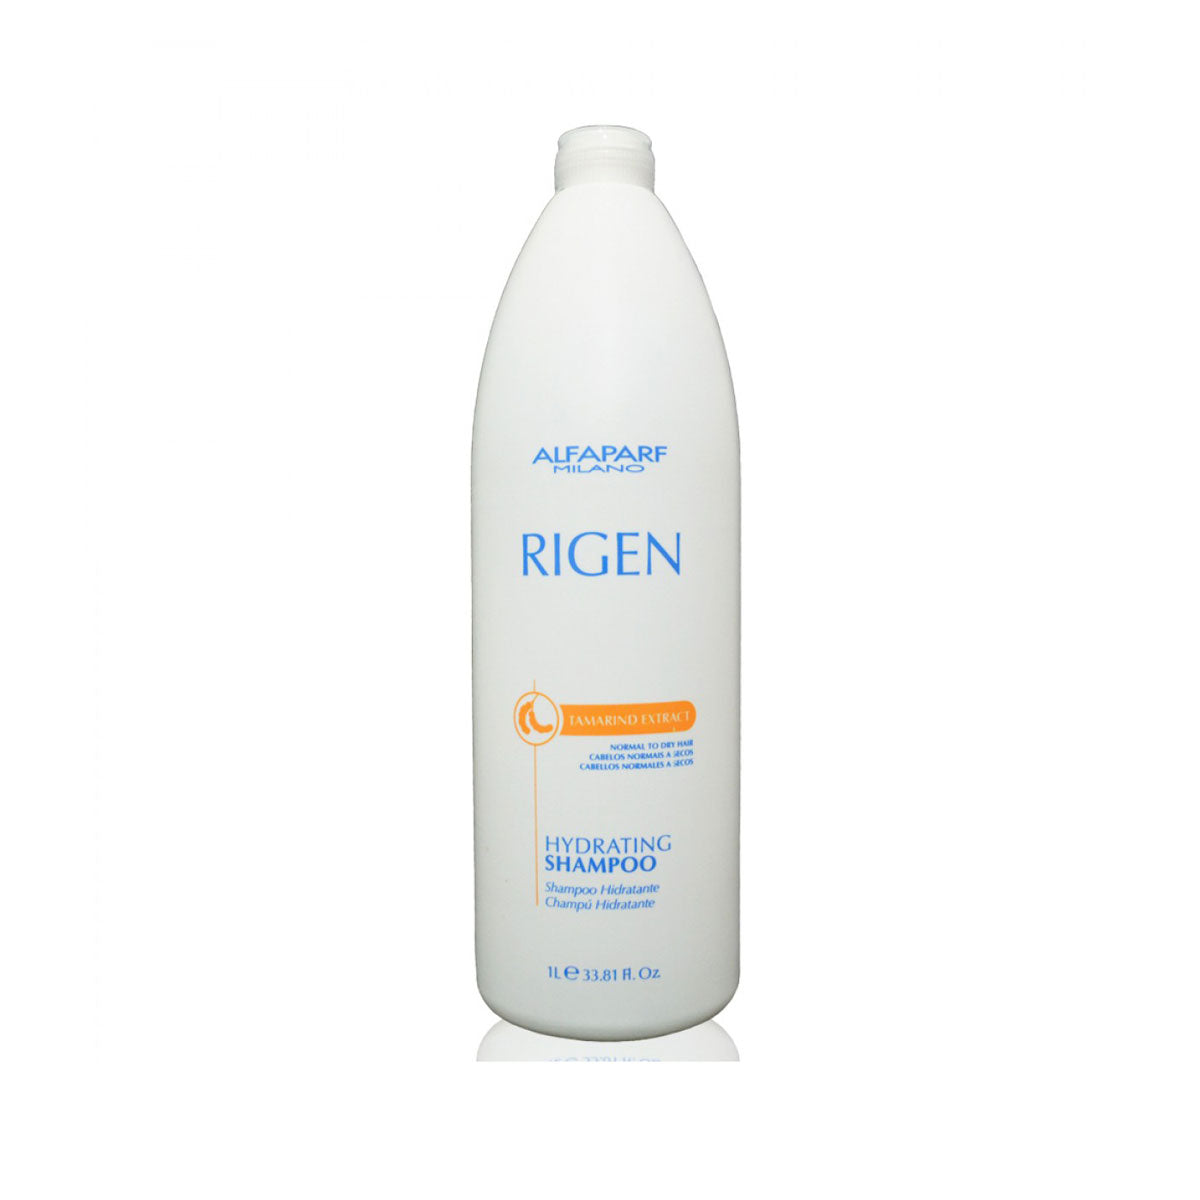 Rigen Hydrating Shampoo PH 3.5 Alfaparf Milano